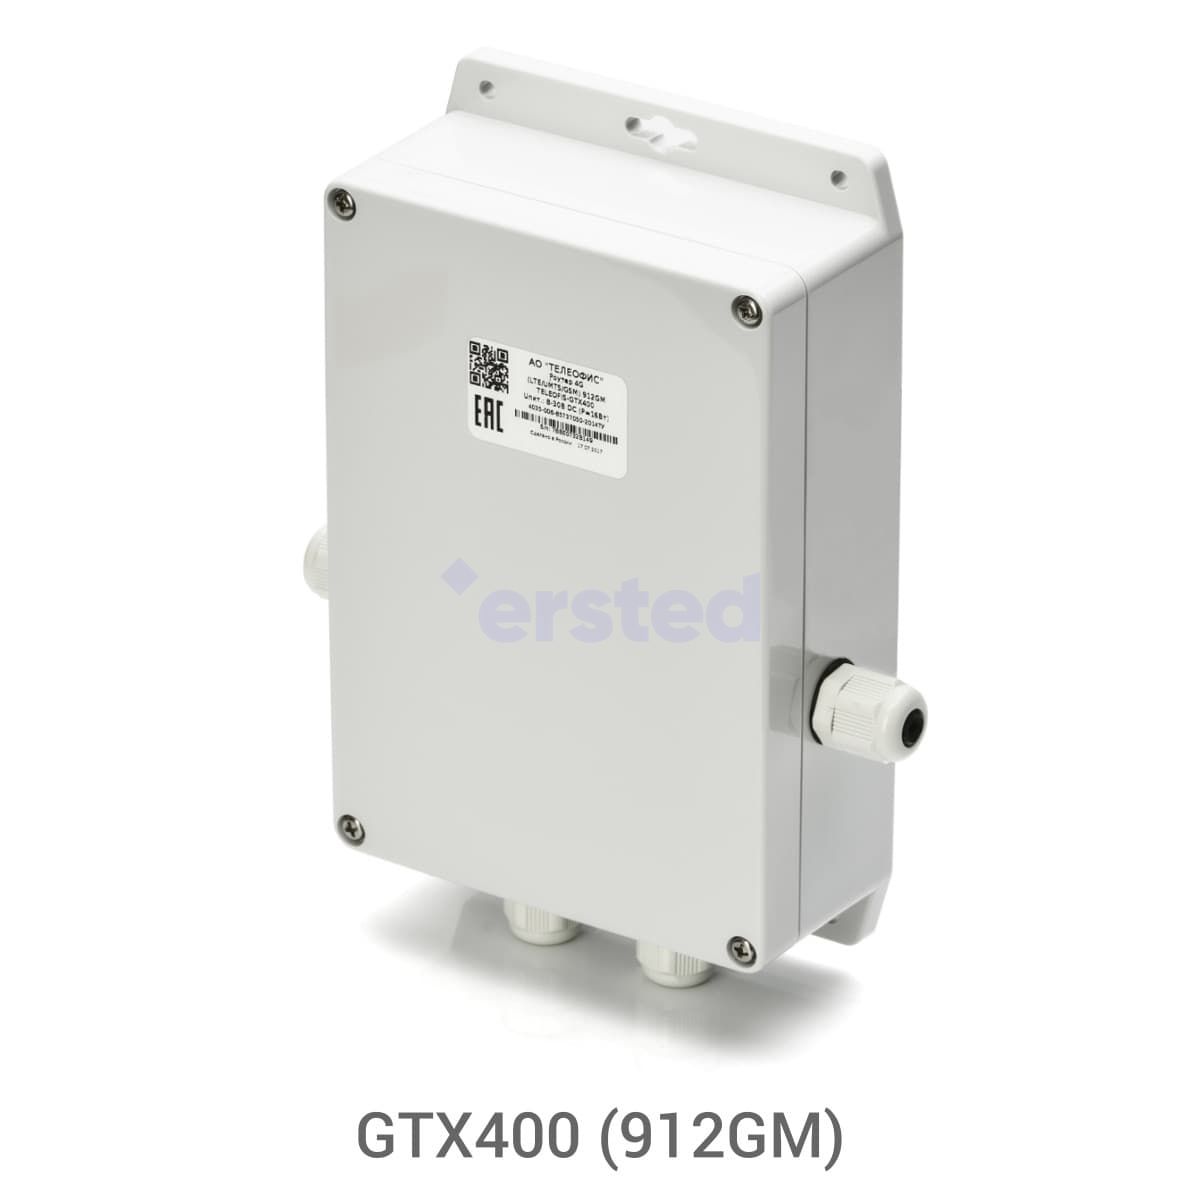 4G роутер TELEOFIS GTX400 (912GM), фото 